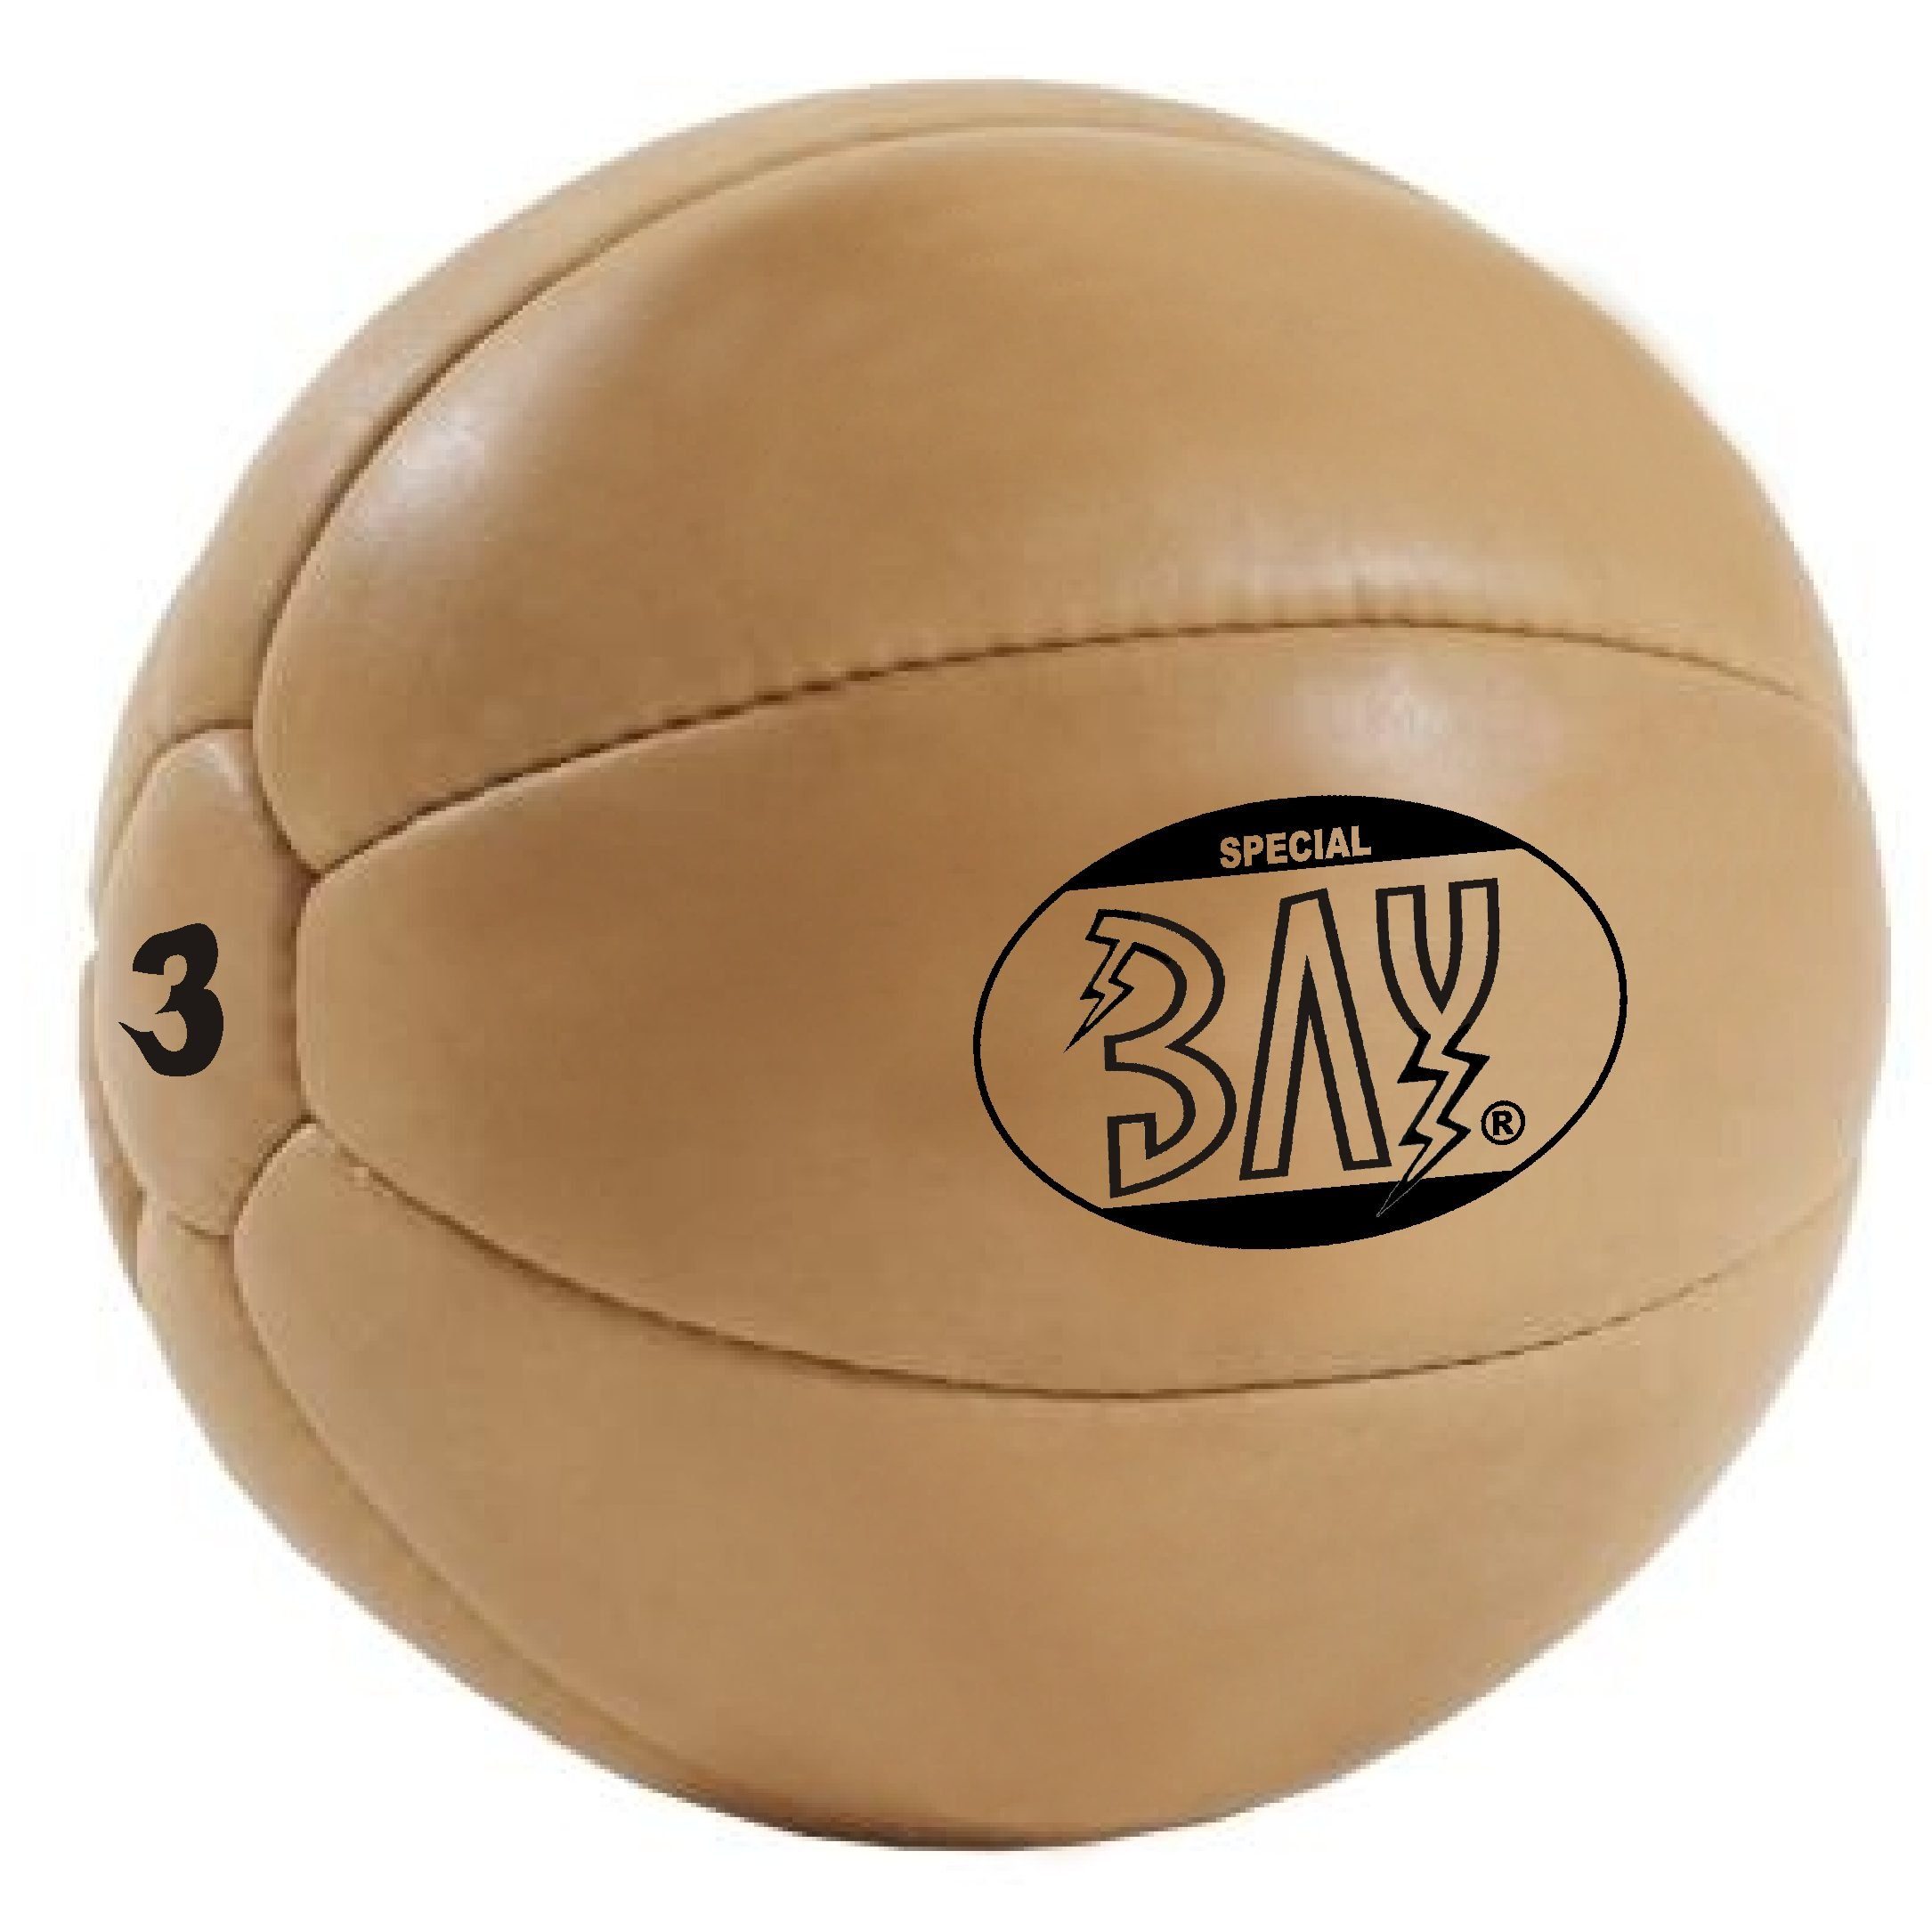 BAY-Sports Medizinball natur Kraftsport Trainingsball Ausführung Kunstleder kg klassische Profi Kraftball, 3kg Fitnessball Vollball braun 3